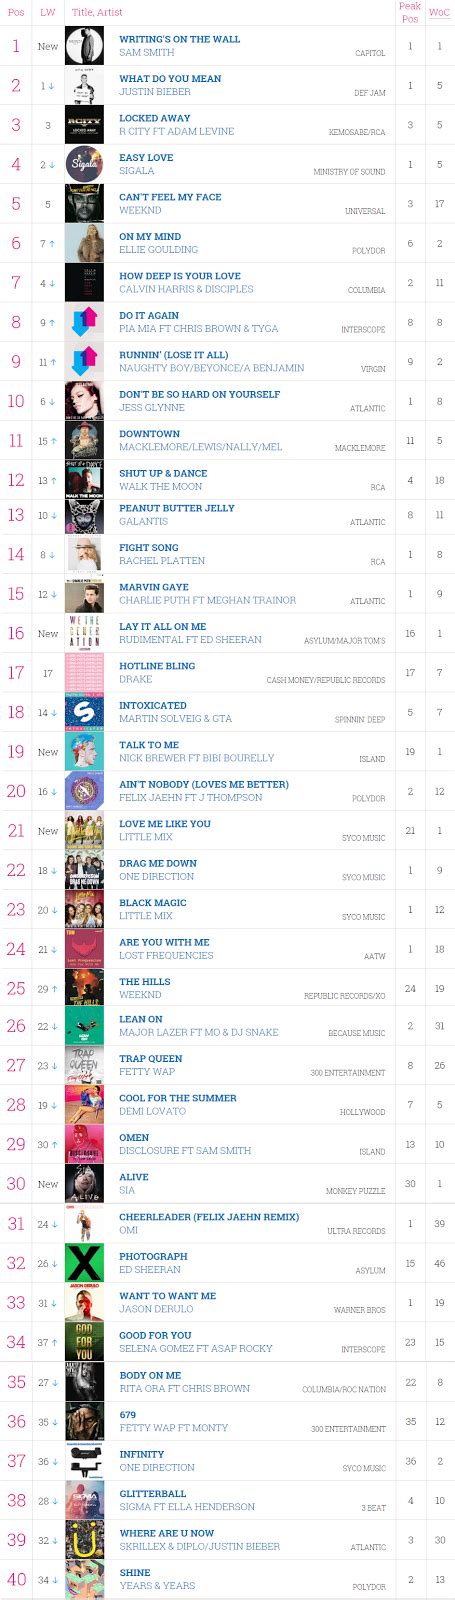 Top 50 Uk Charts